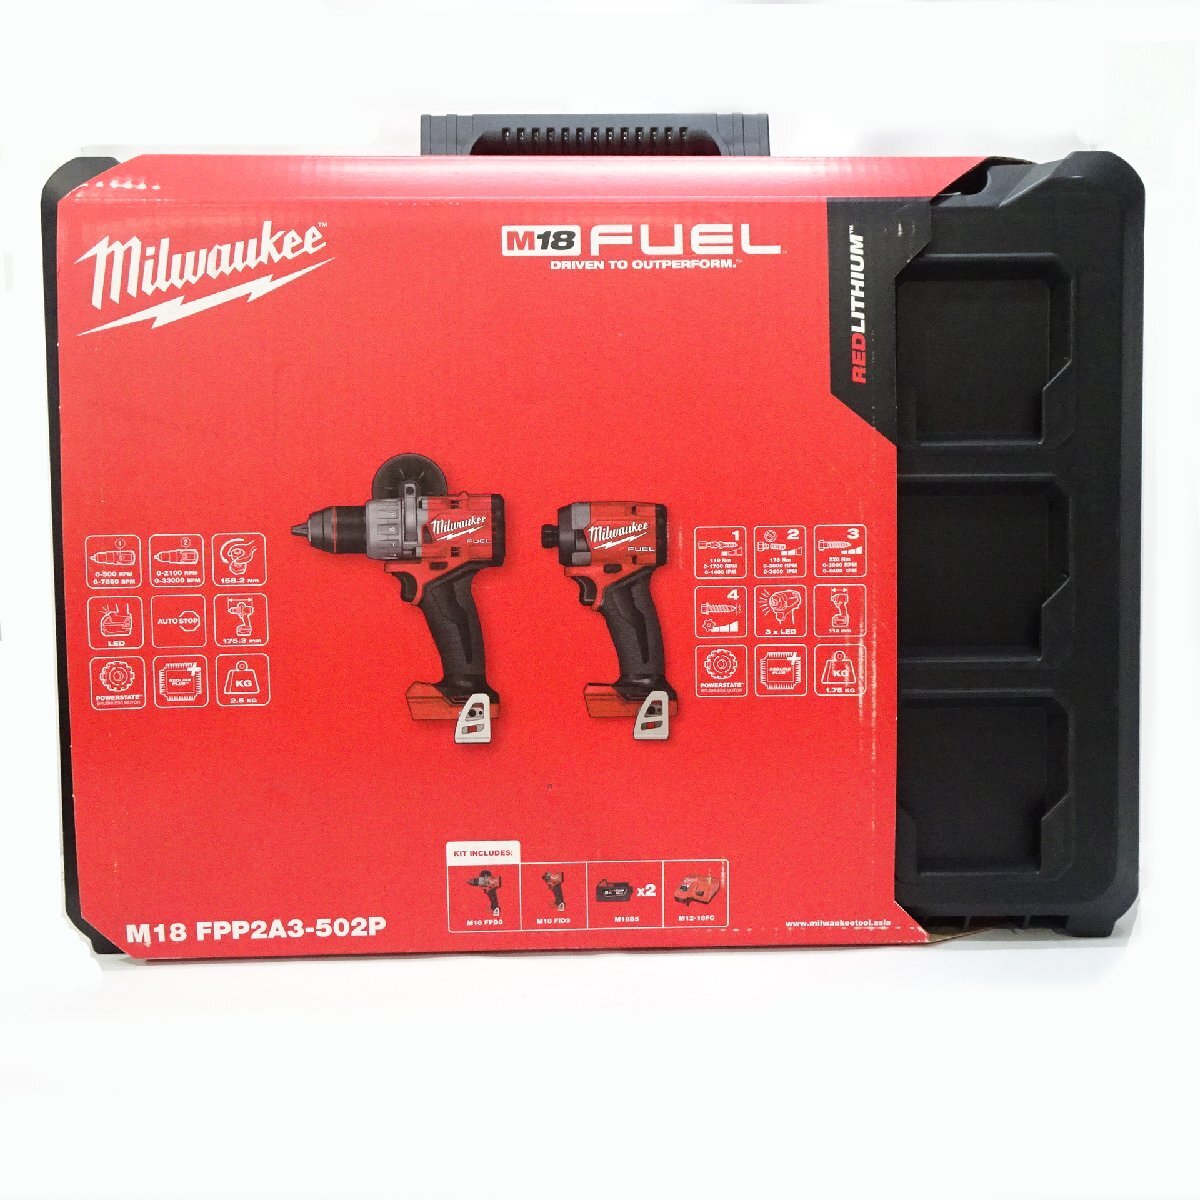 [ new goods ]Milwaukee Mill War key 18V 5.0Ah impact driver + vibration drill set M18 FPP2A3-502P